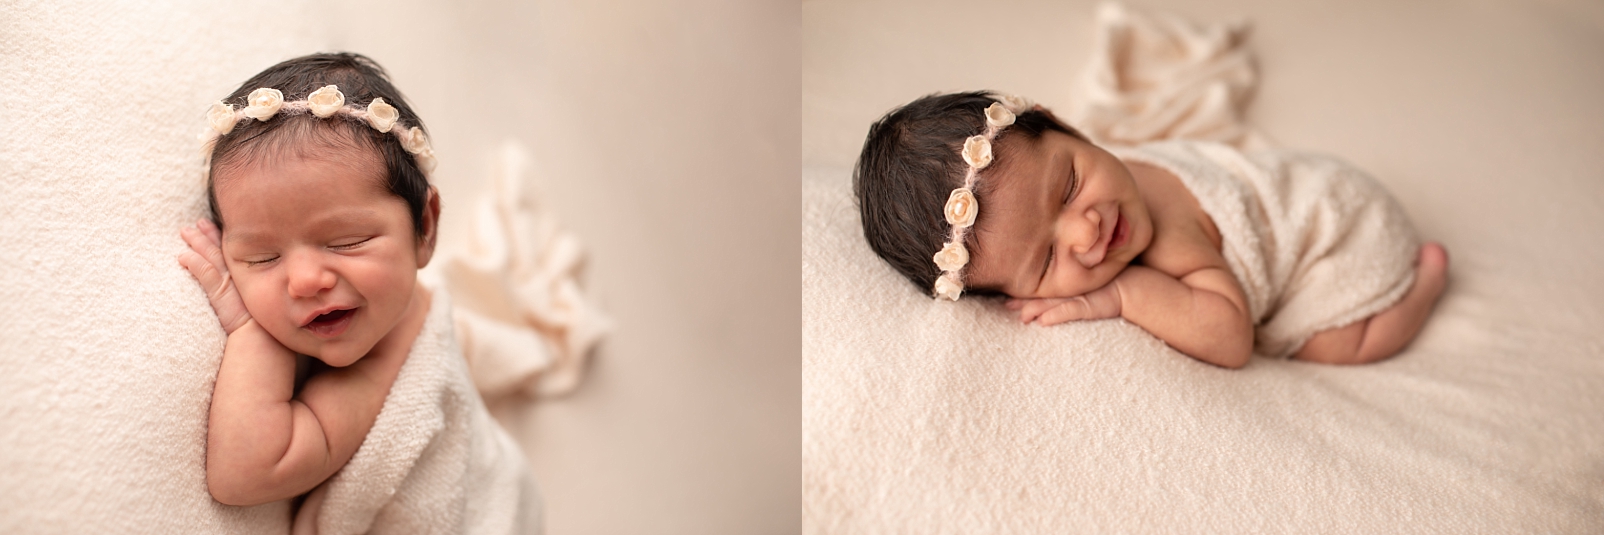 newborn with flower headband smiling
